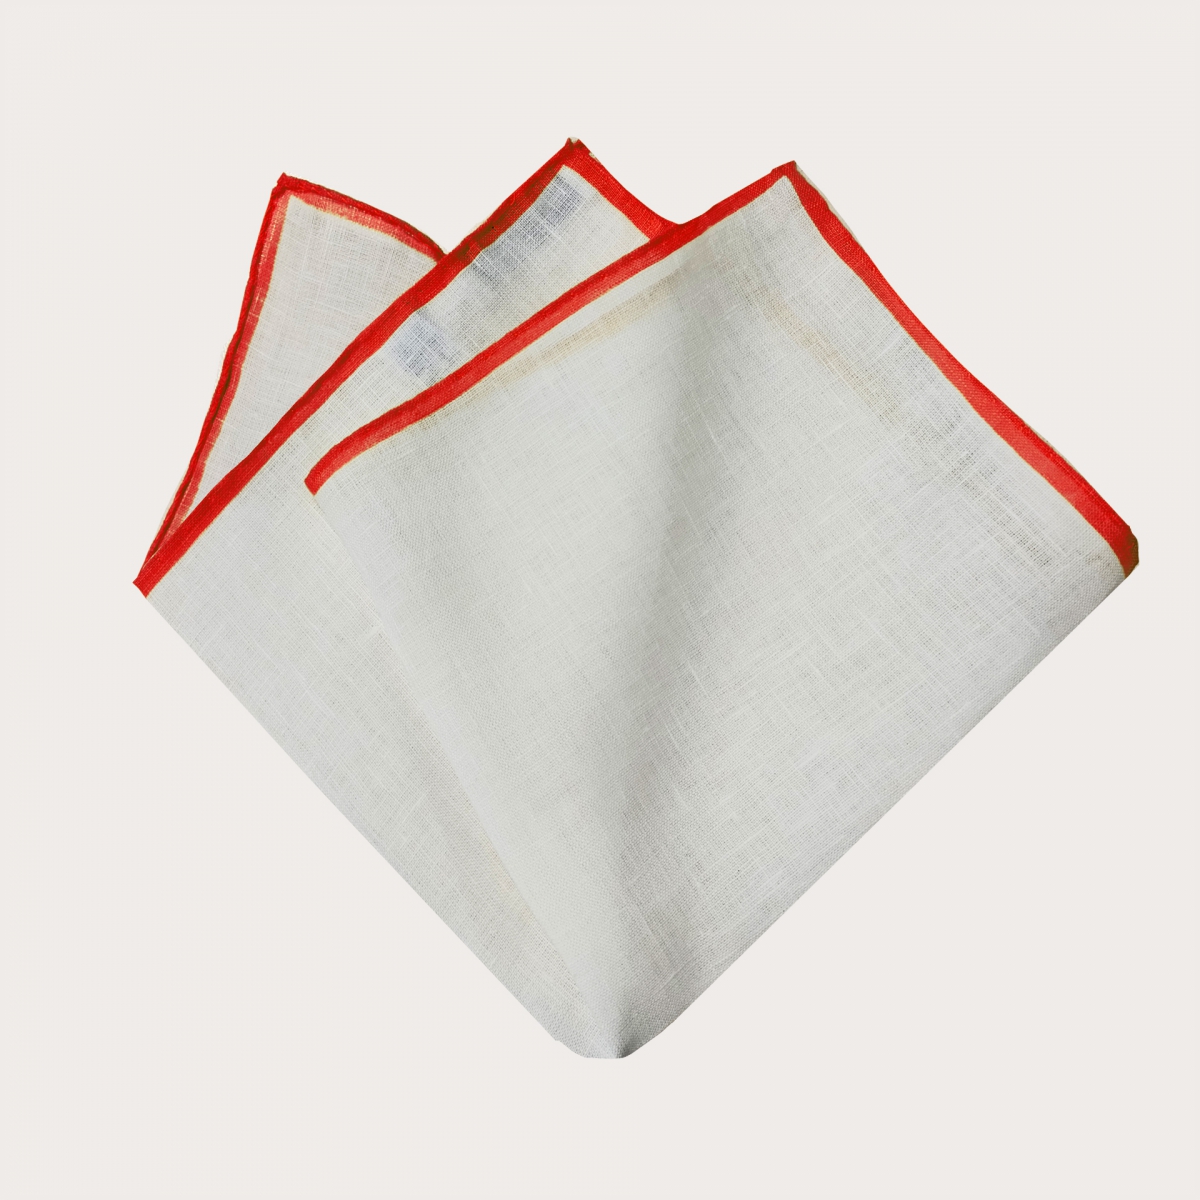 BRUCLE Pañuelo de bolsillo en lino, blanco con bordes rojos